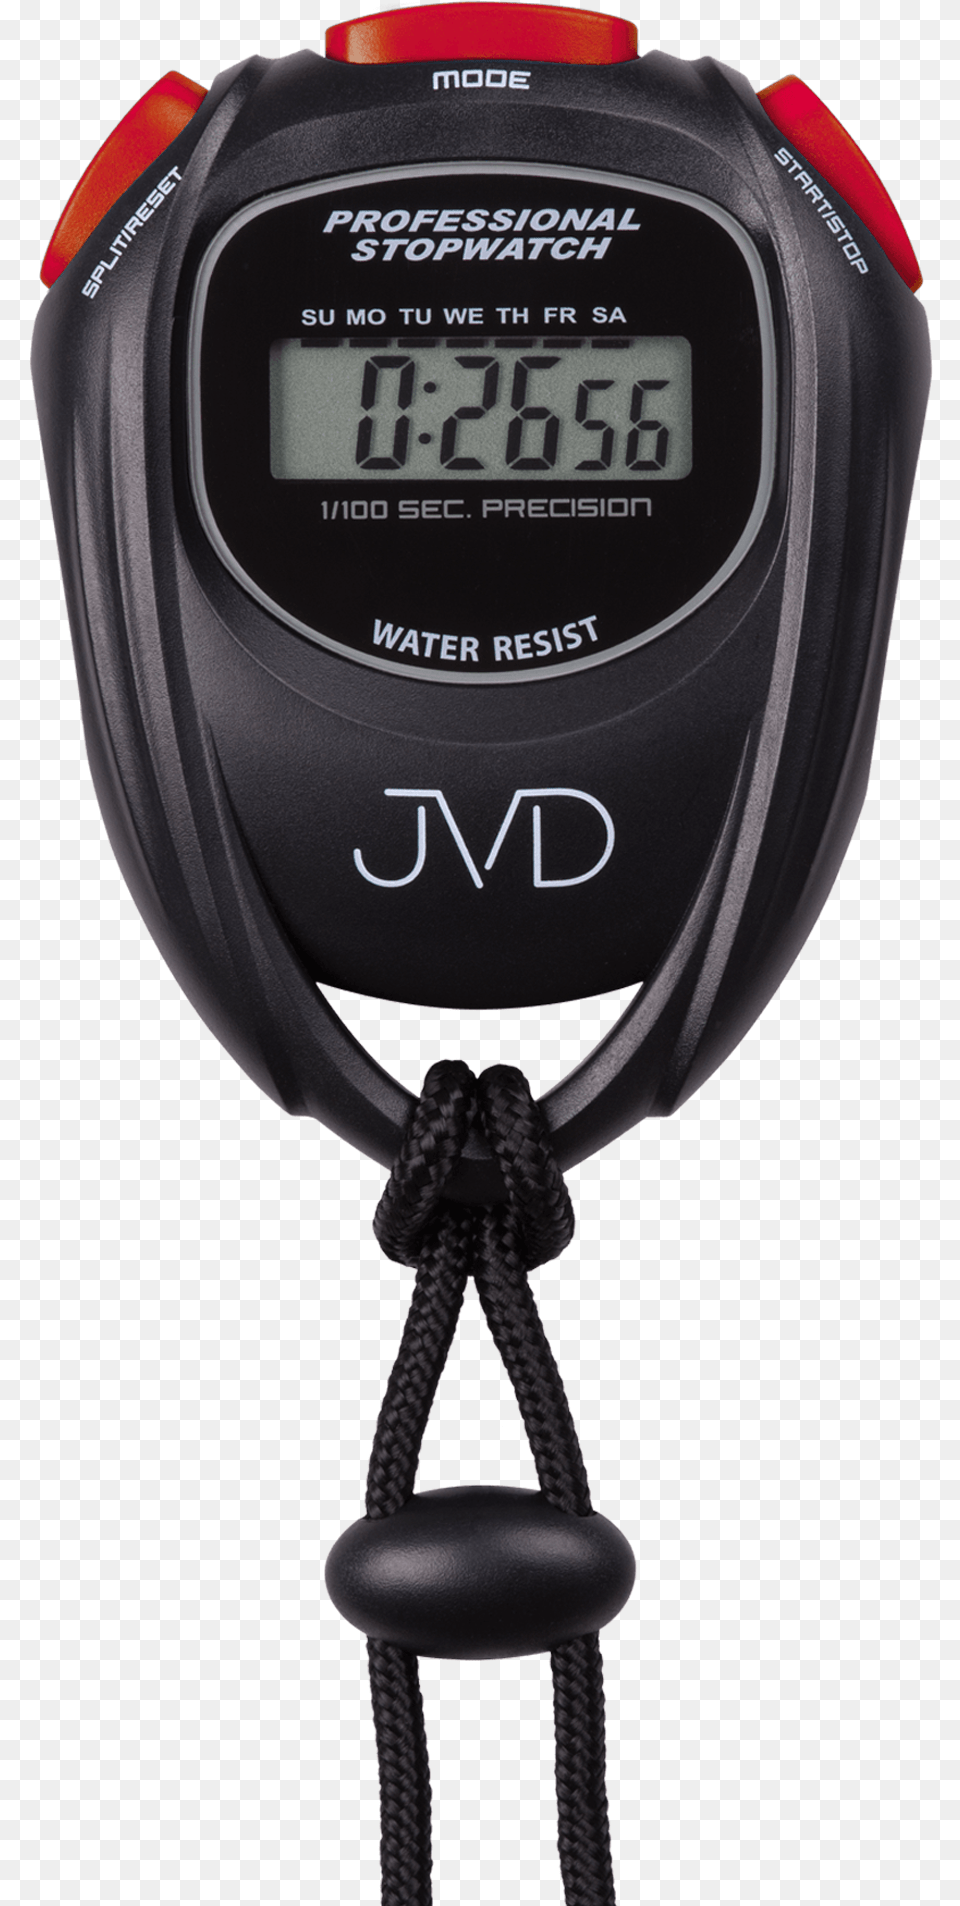 Professional Stopwatch Jvd St80 Stopky Jvd, Wristwatch Png Image